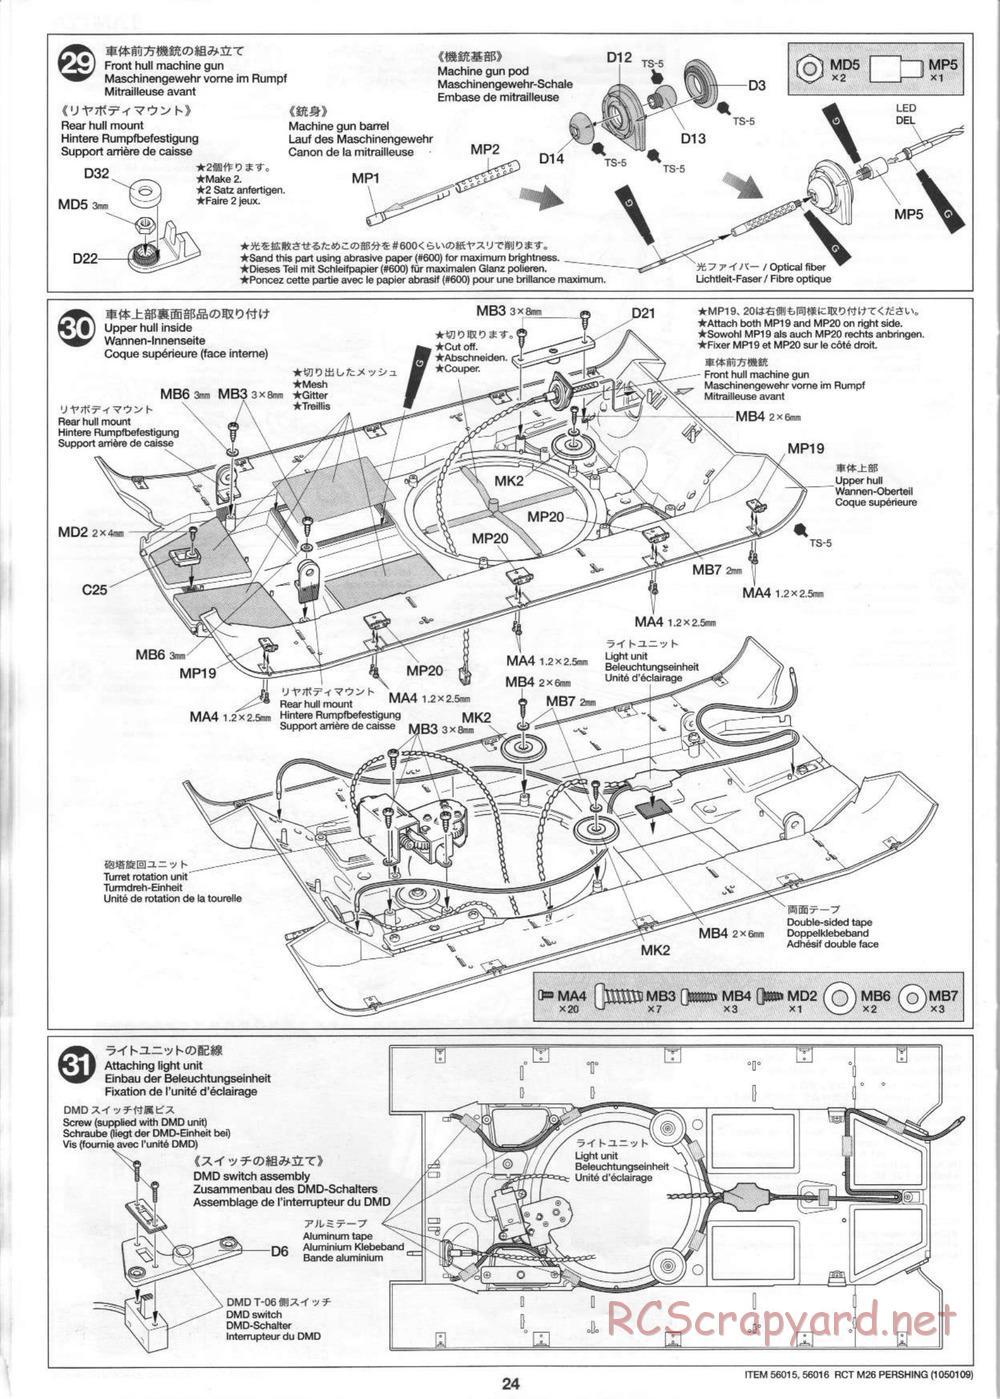 Tamiya - M26 Pershing - 1/16 Scale Chassis - Manual - Page 24